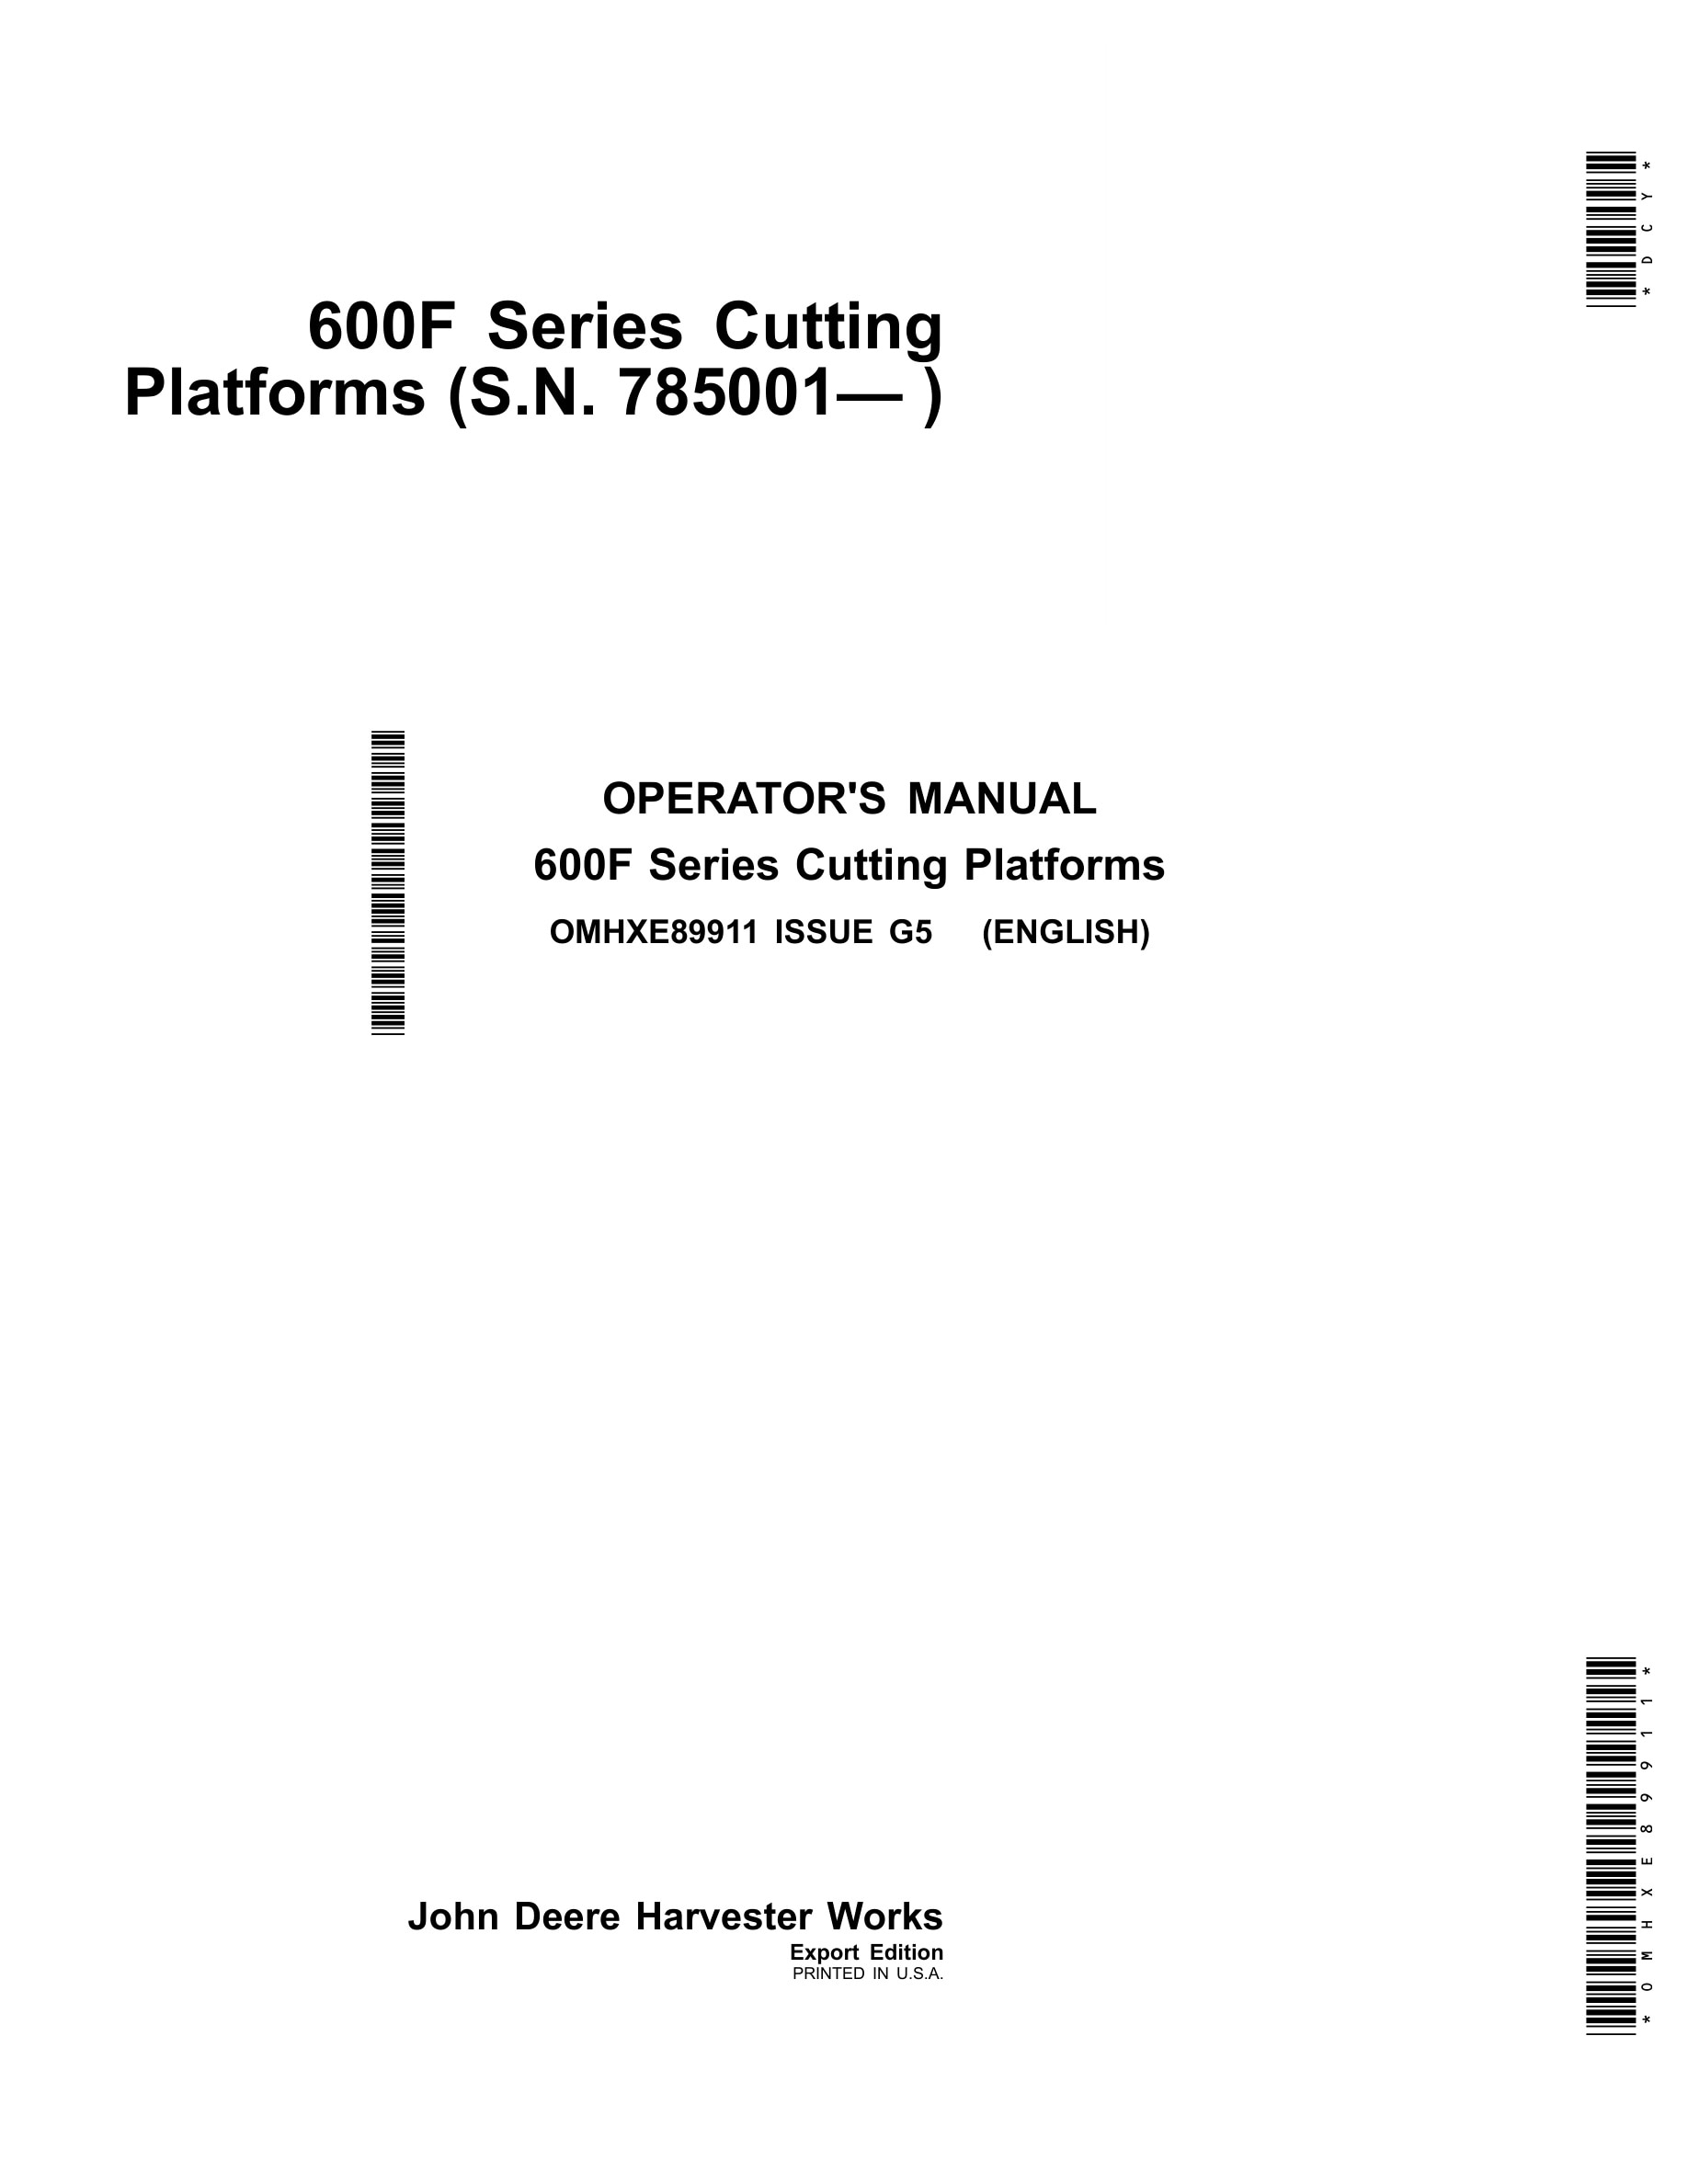 John Deere 600 F Series Cutting Platforms Operator Manual OMHXE89911-1